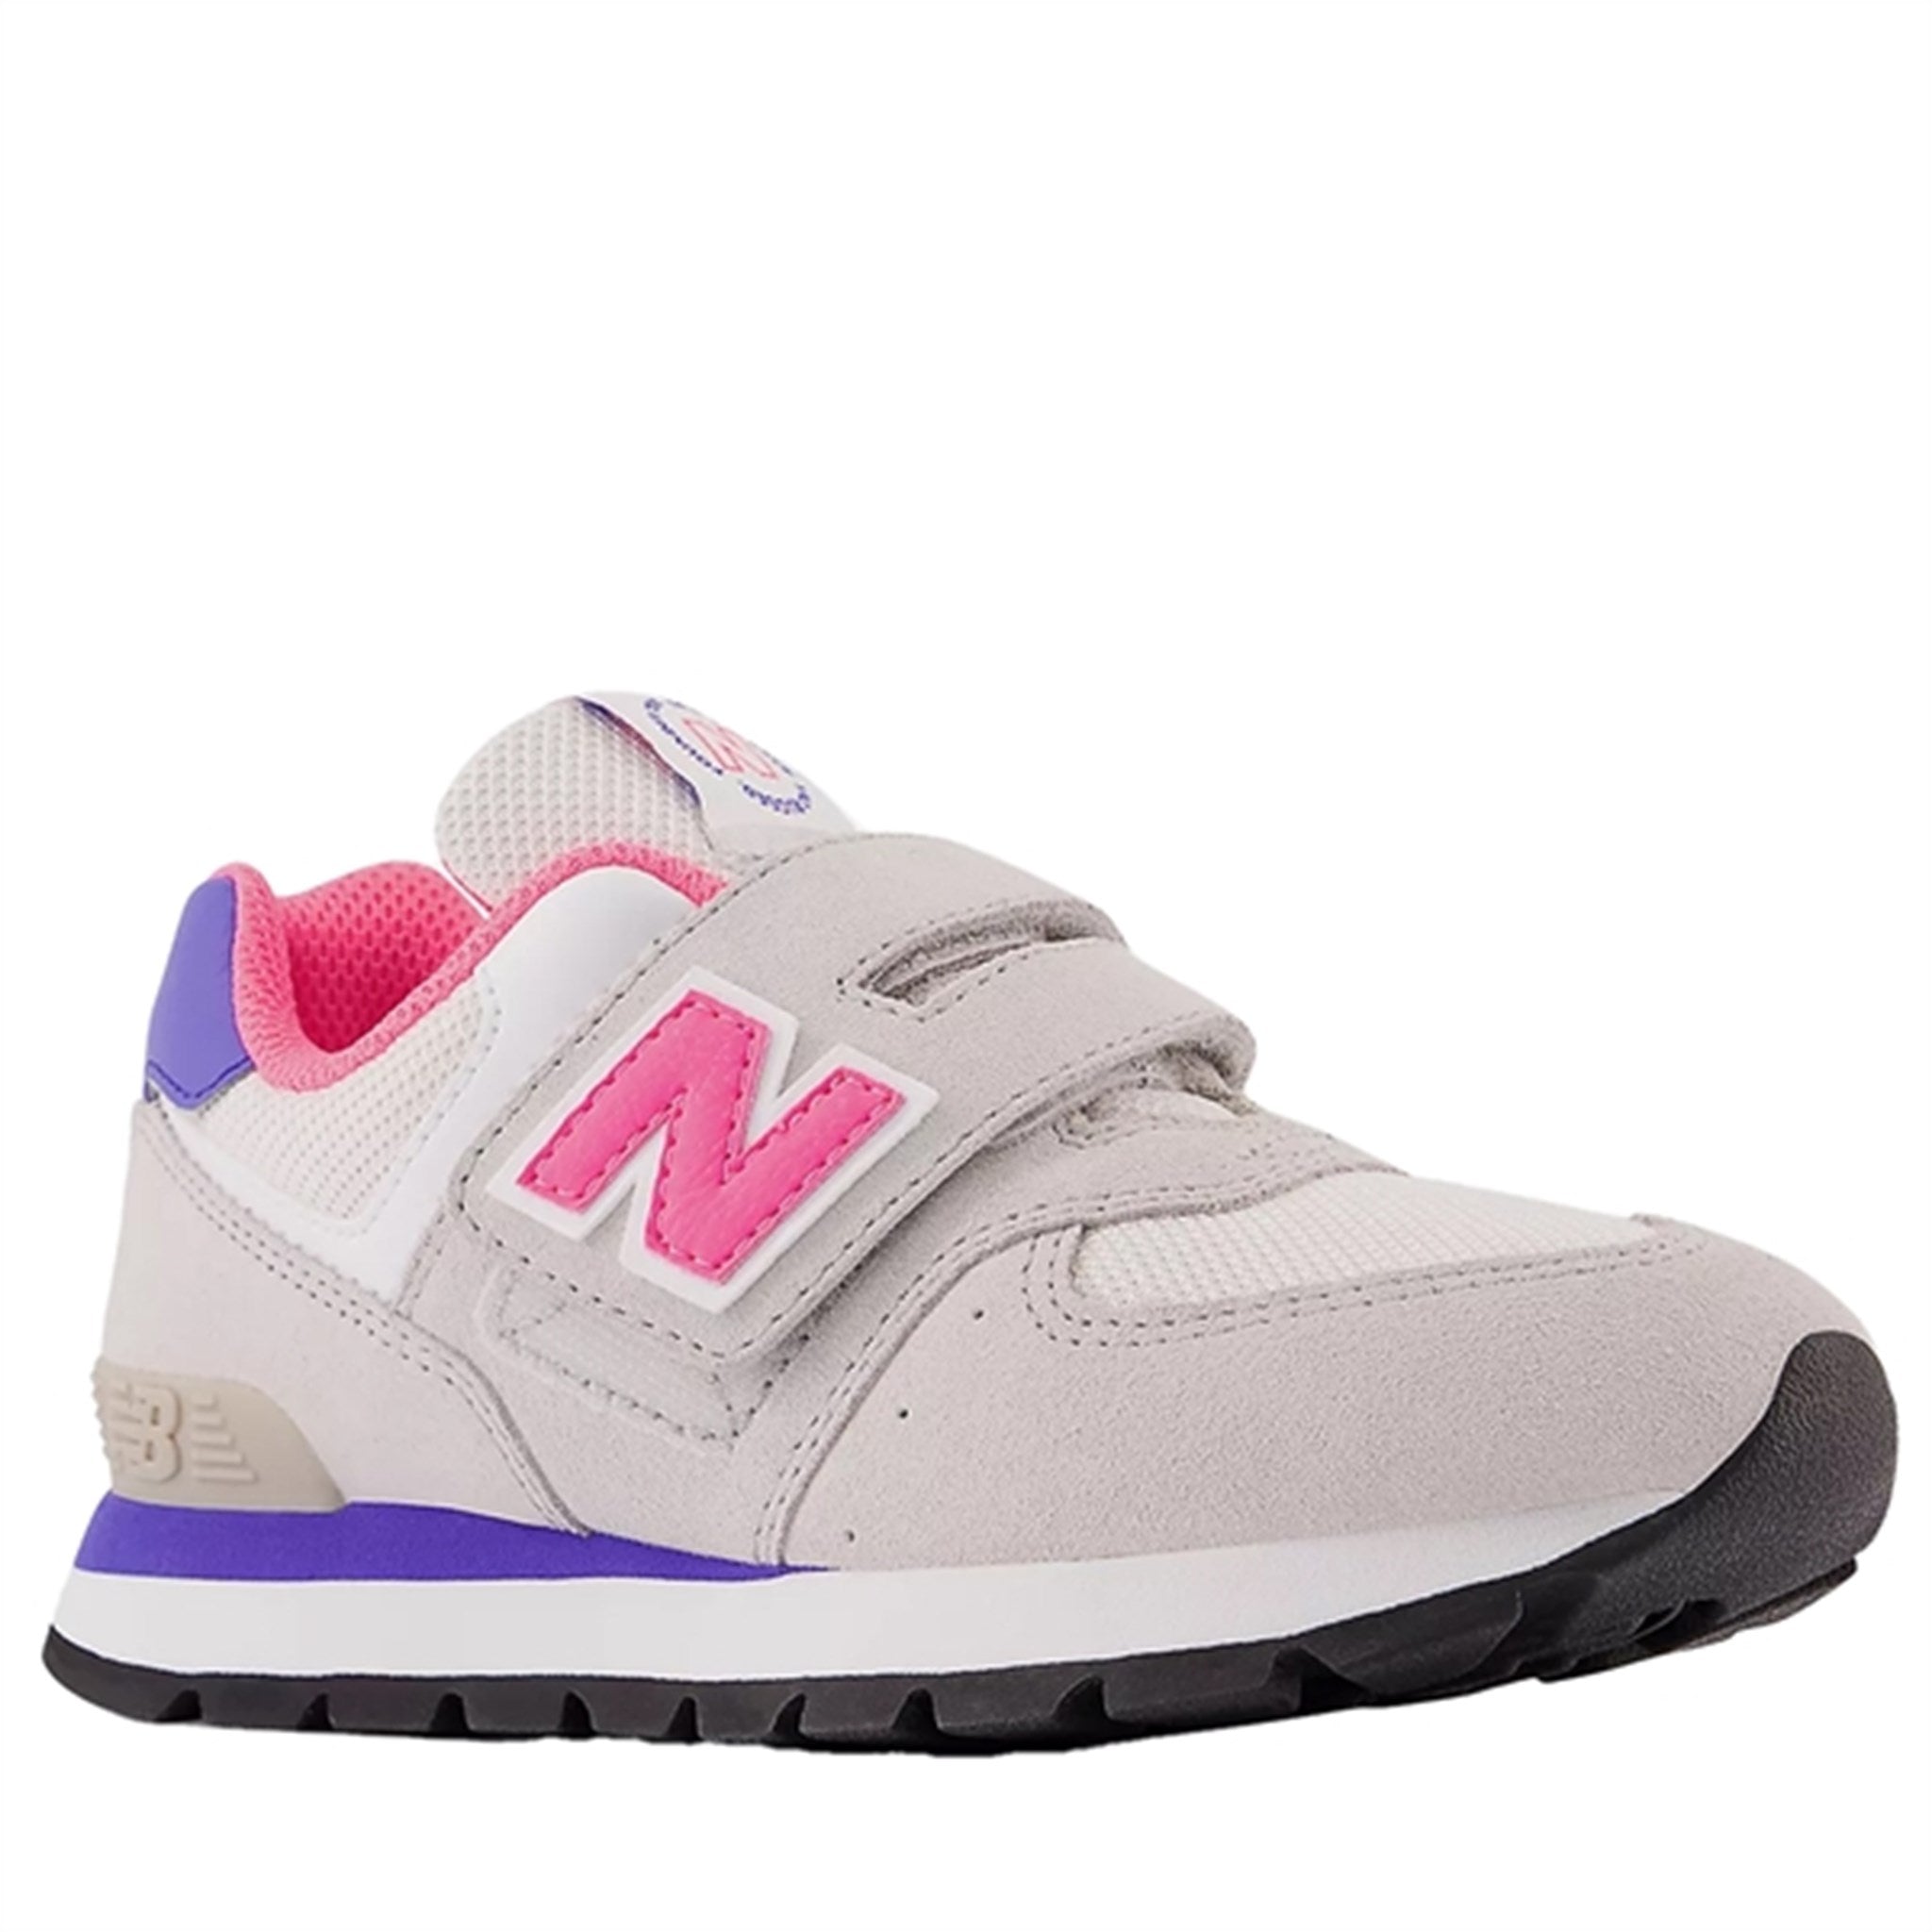 New Balance 574 Summer Fog/Neon Pink Sneakers 2